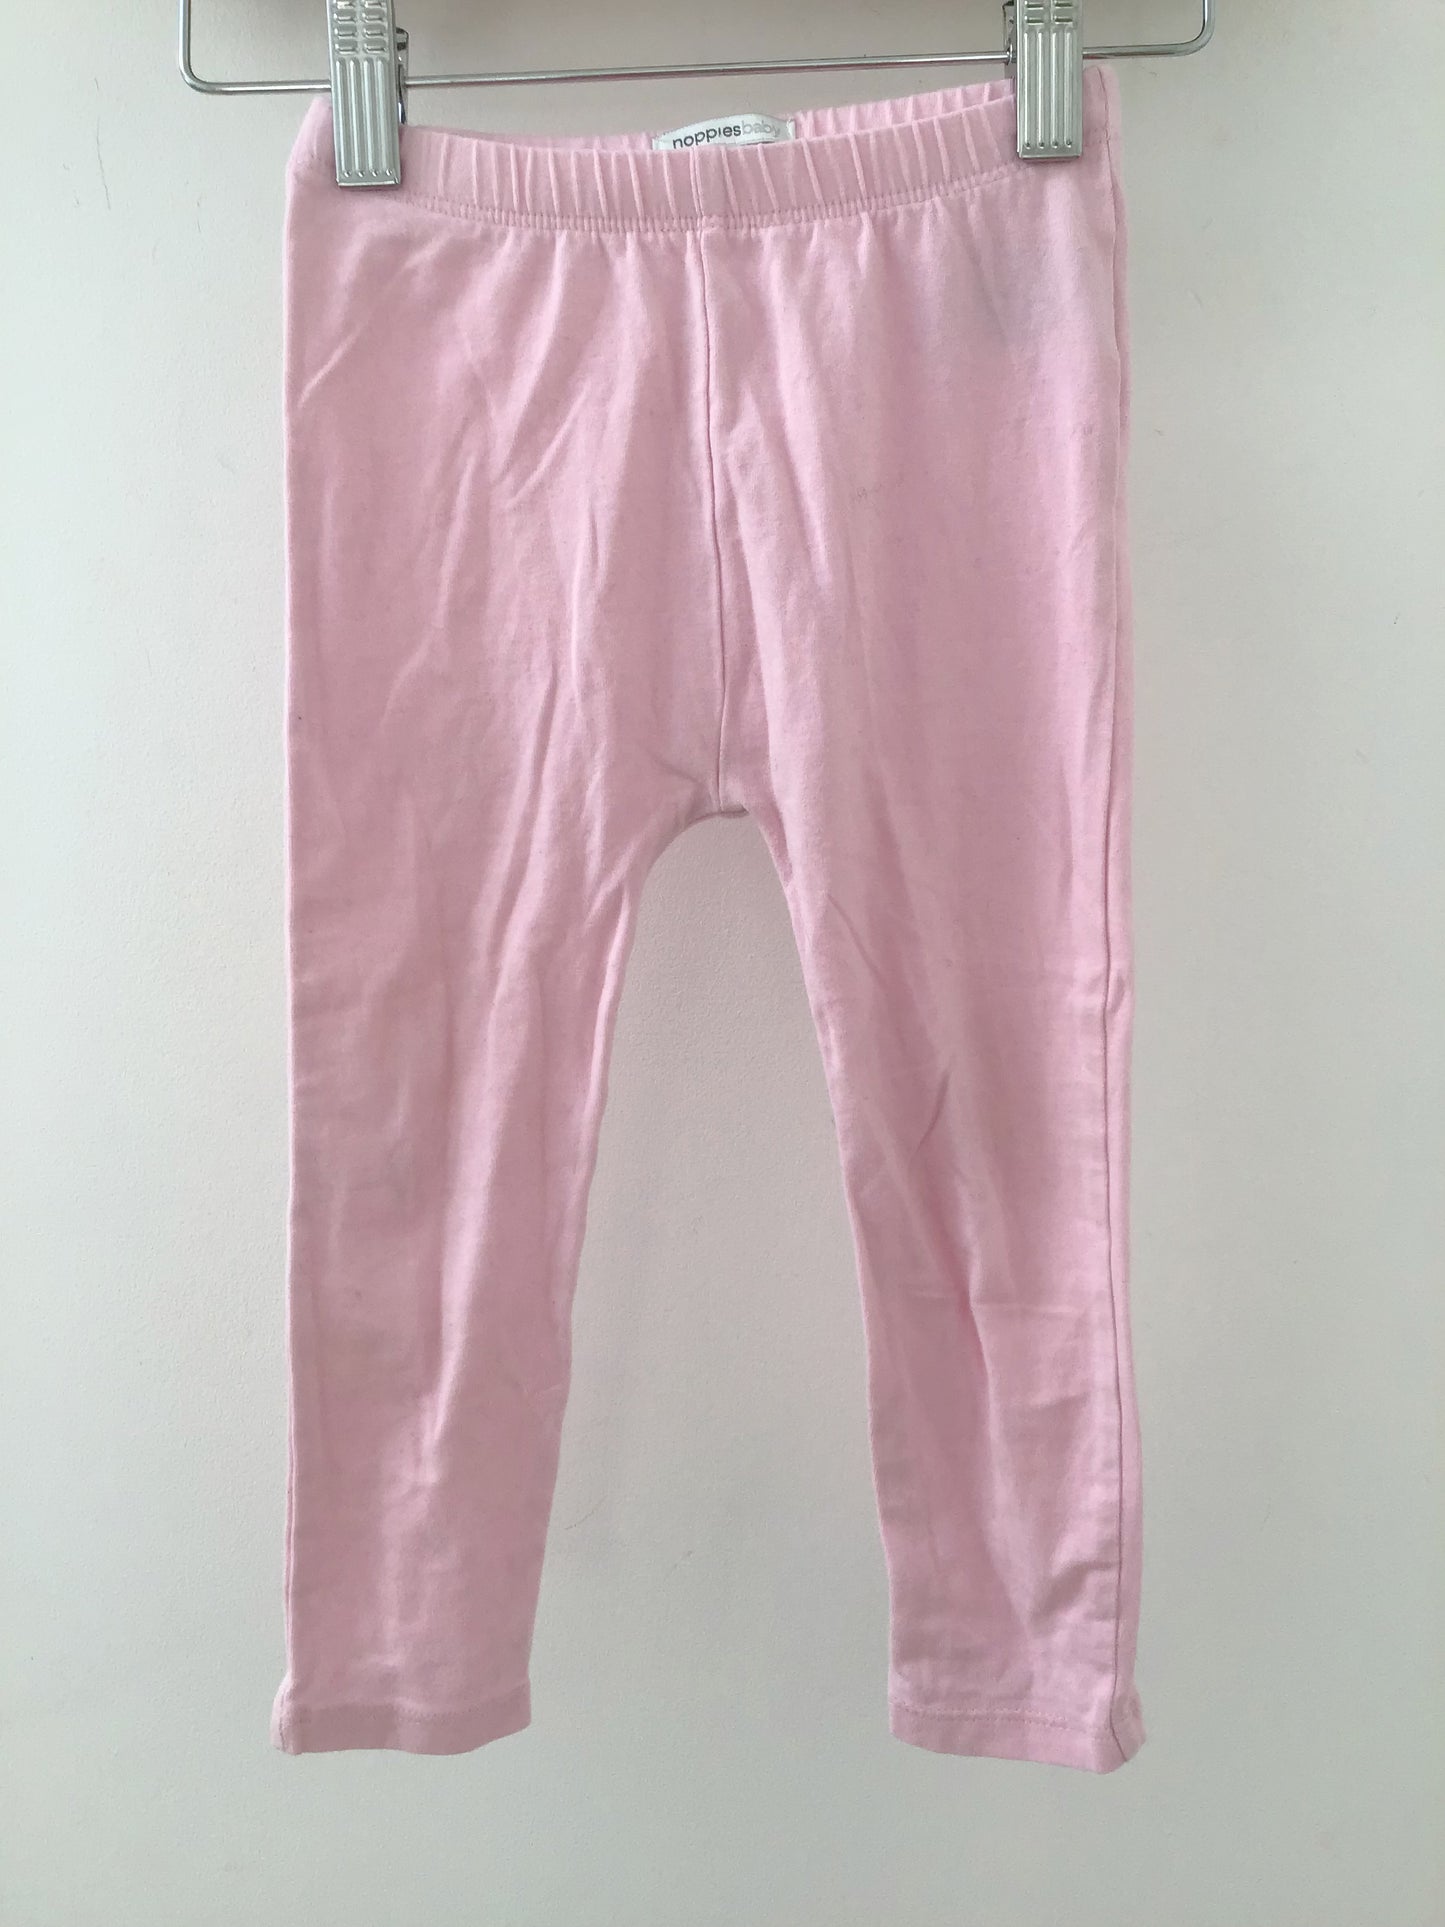 Noppies pink leggings 18m